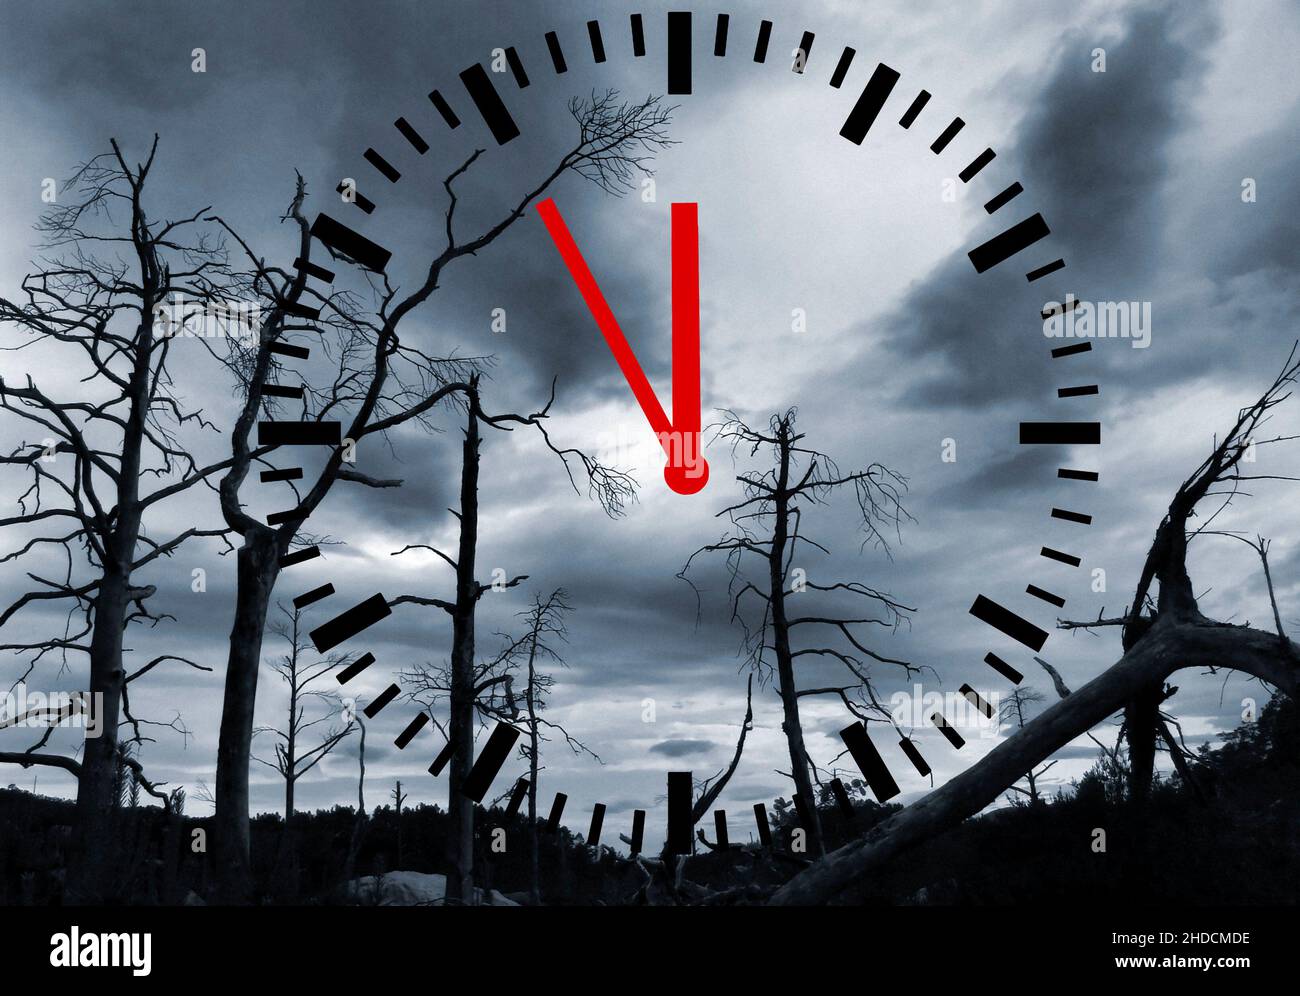 Toter durch Umweltverschmutzung Wald, Uhr zeigt 5 vor 12, Foto de stock